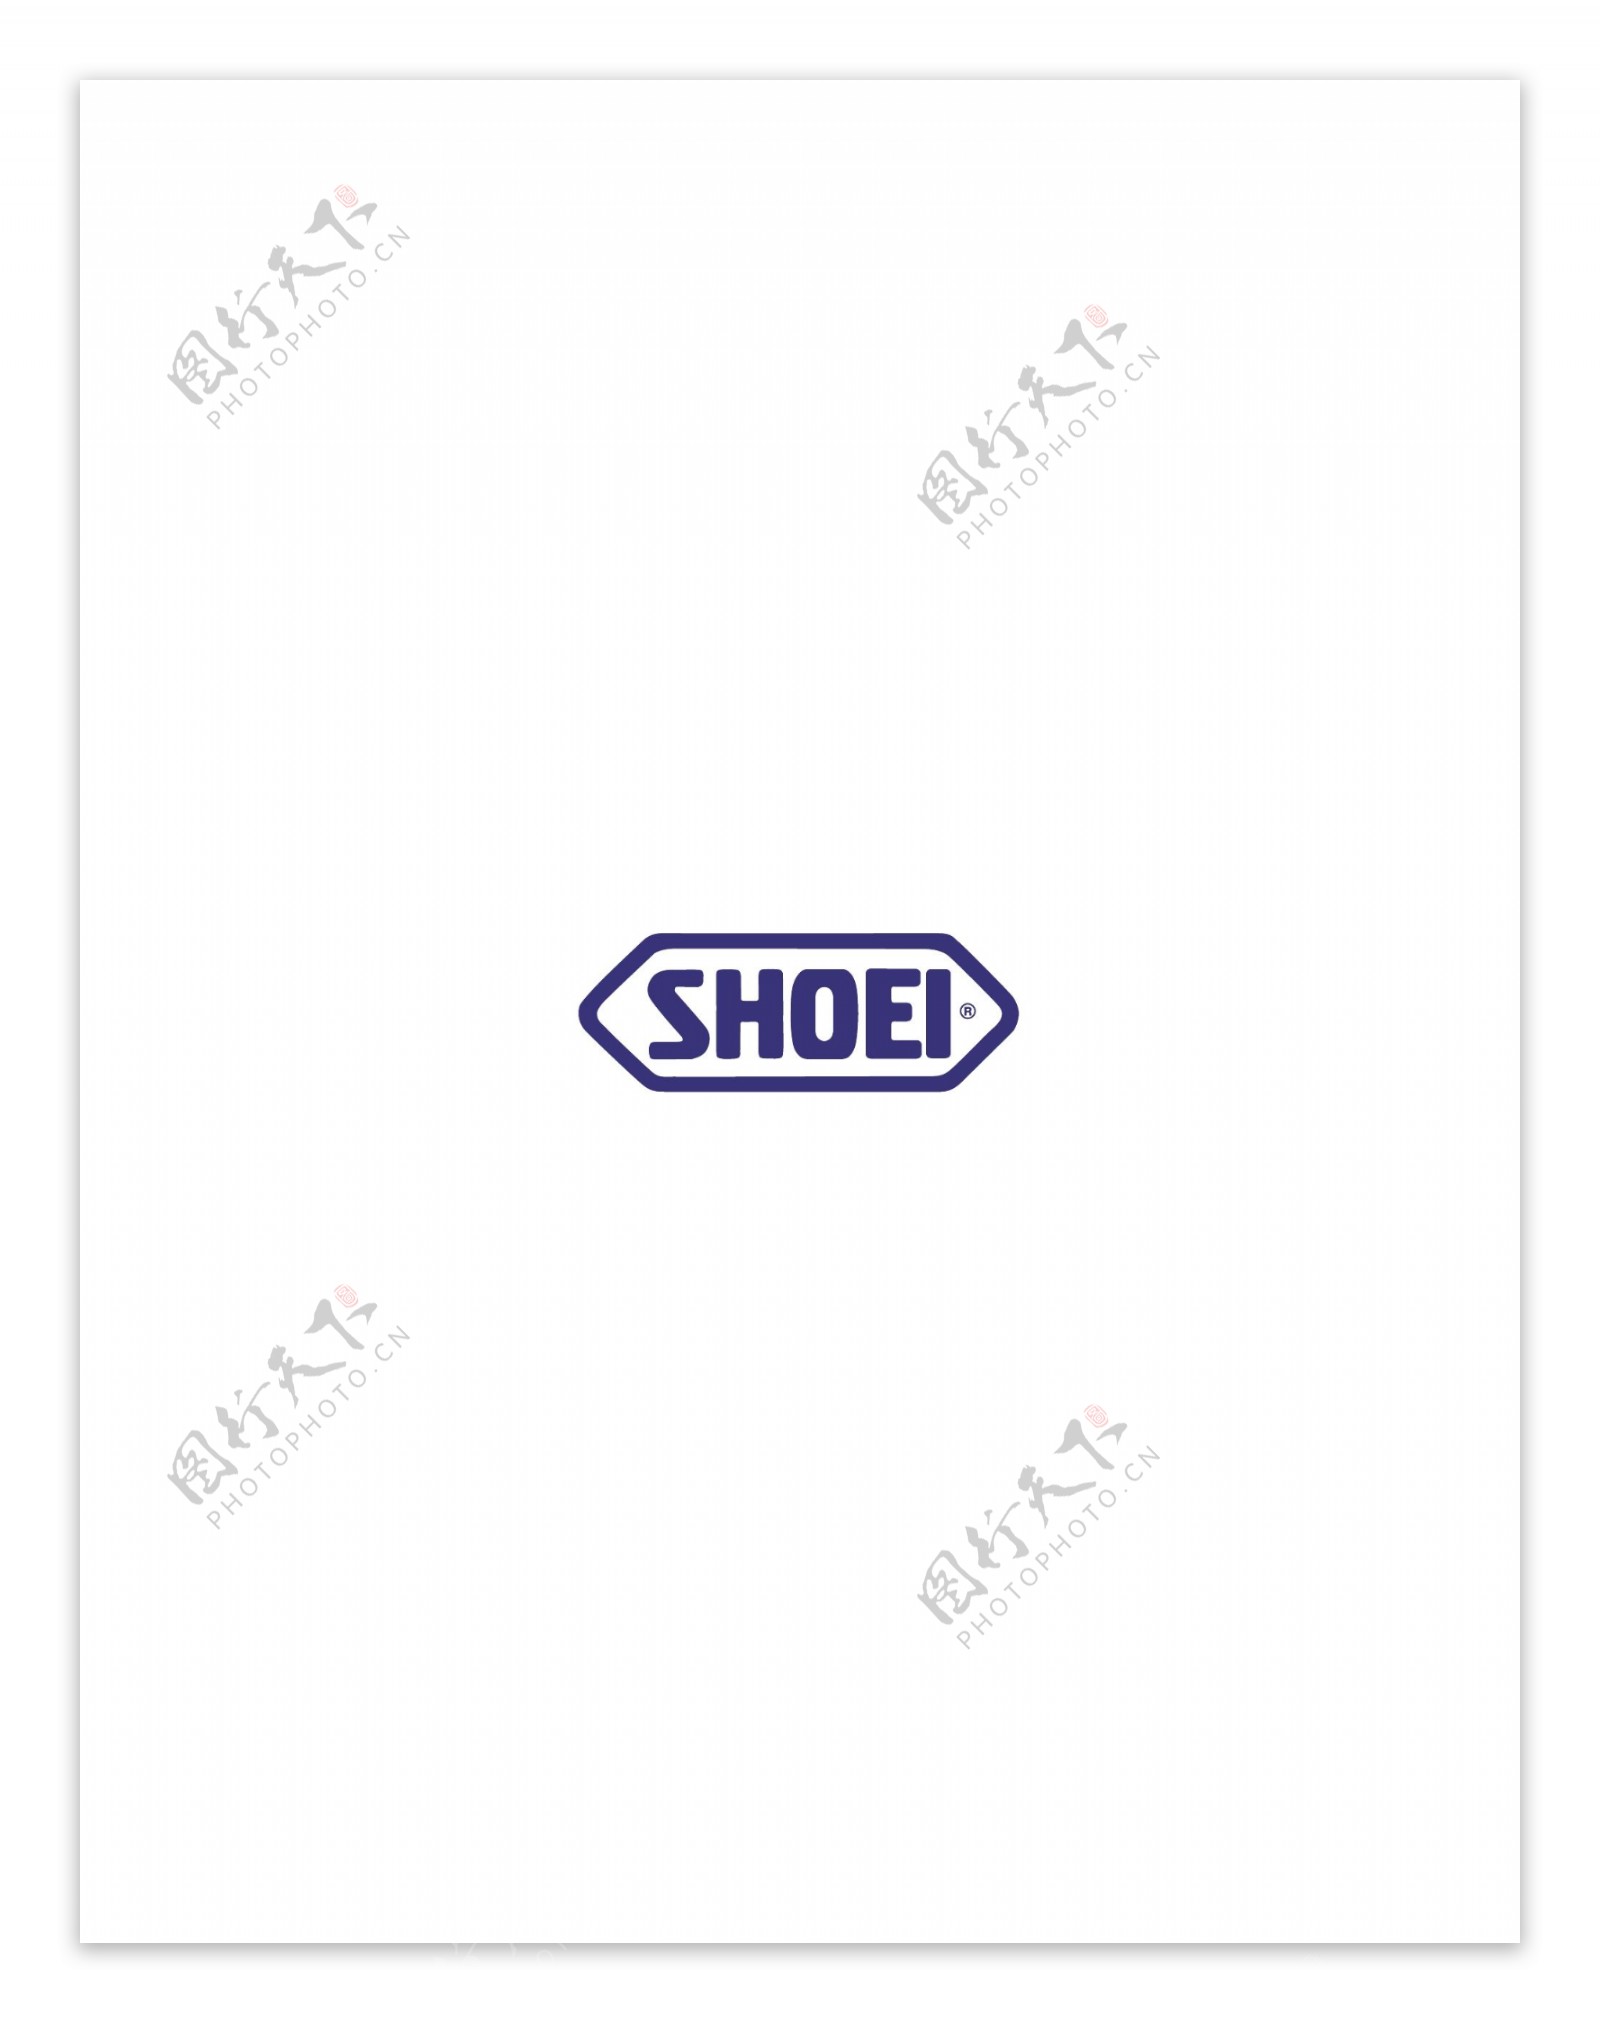 Shoeilogo设计欣赏网站LOGO设计Shoei下载标志设计欣赏